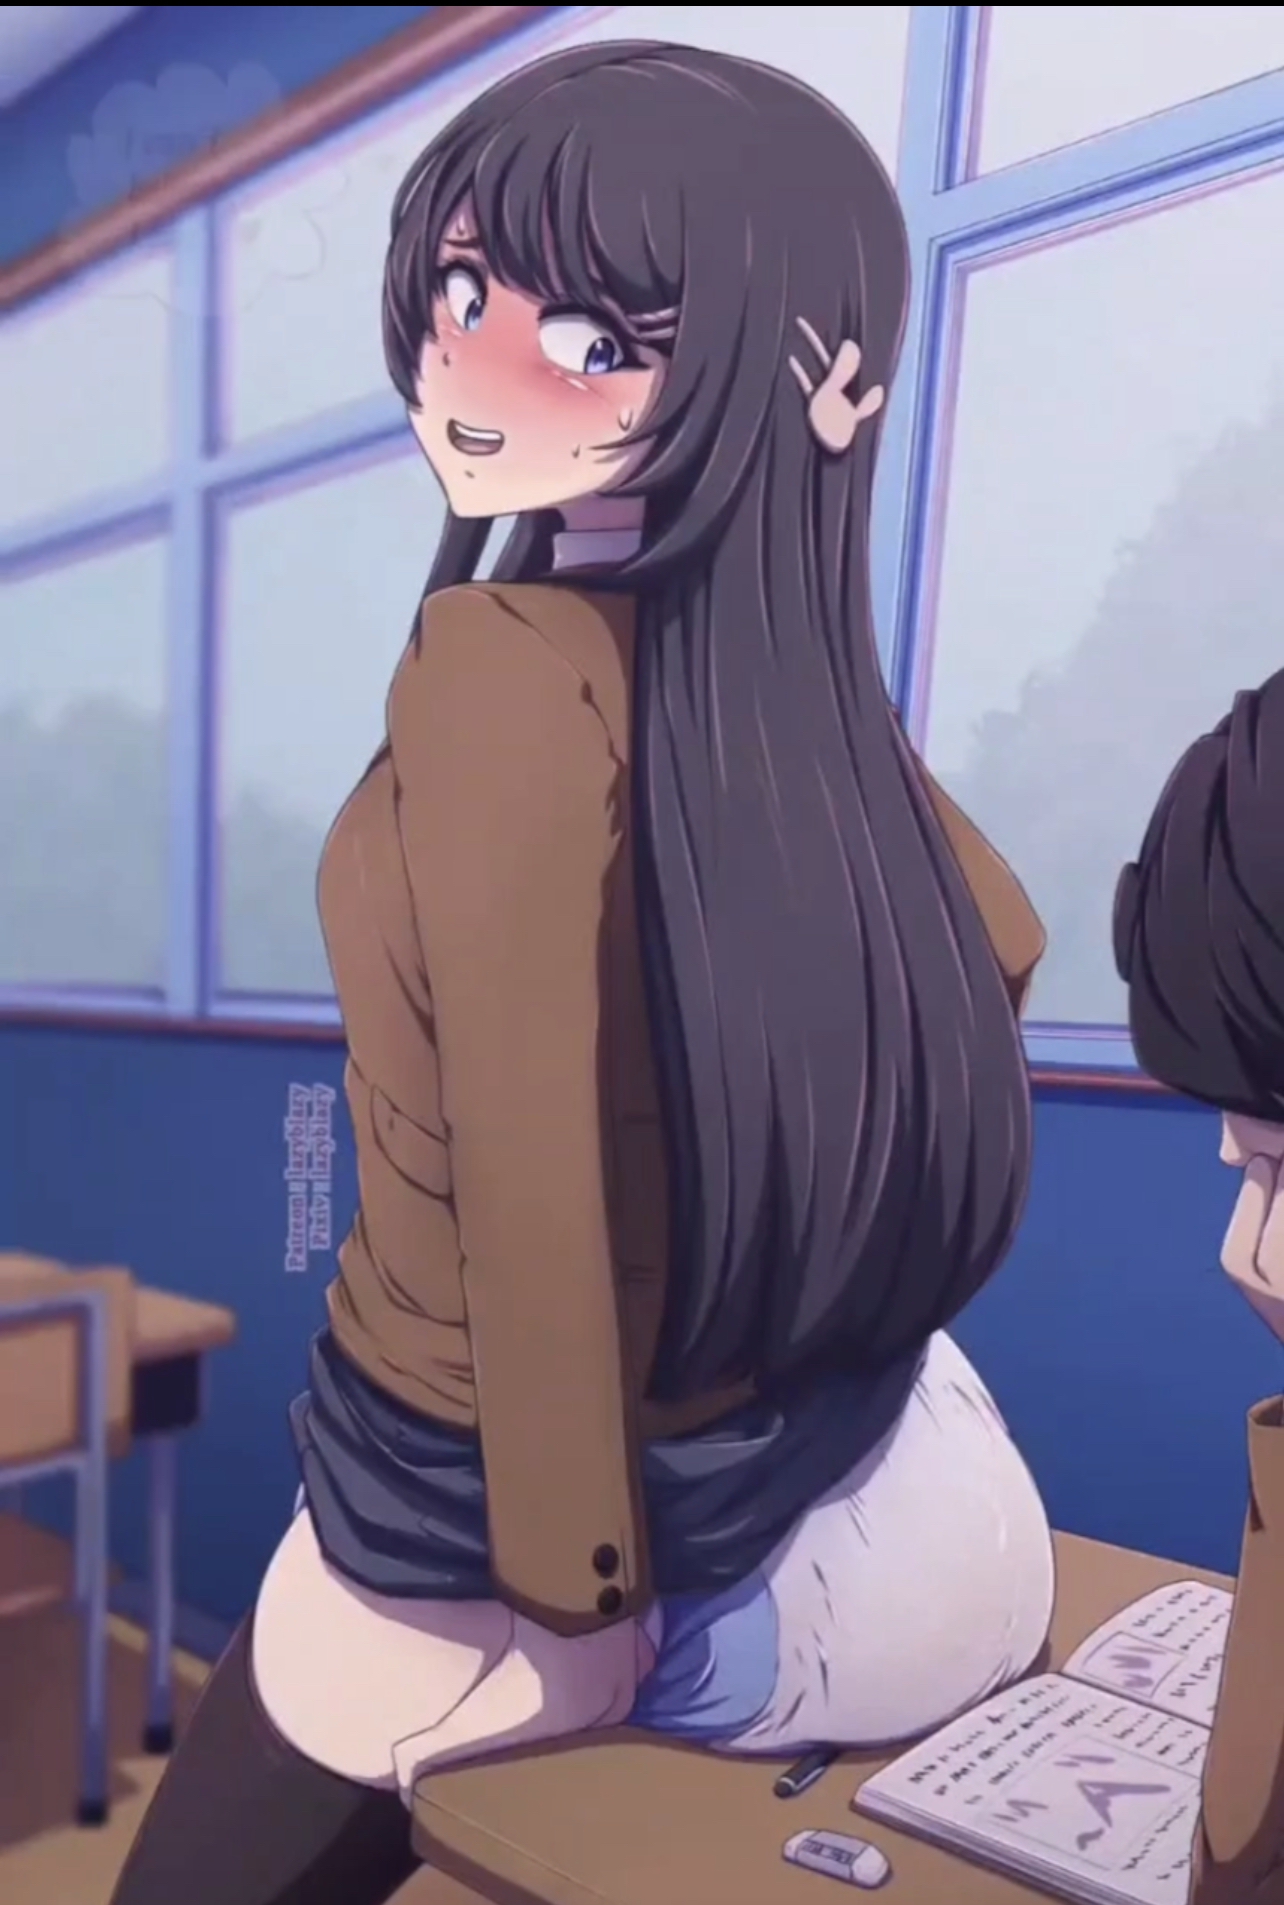 Cartoon Diaper Porn Poop - Mai Sakurajima poops her diaper in class (No Audio) - ThisVid.com